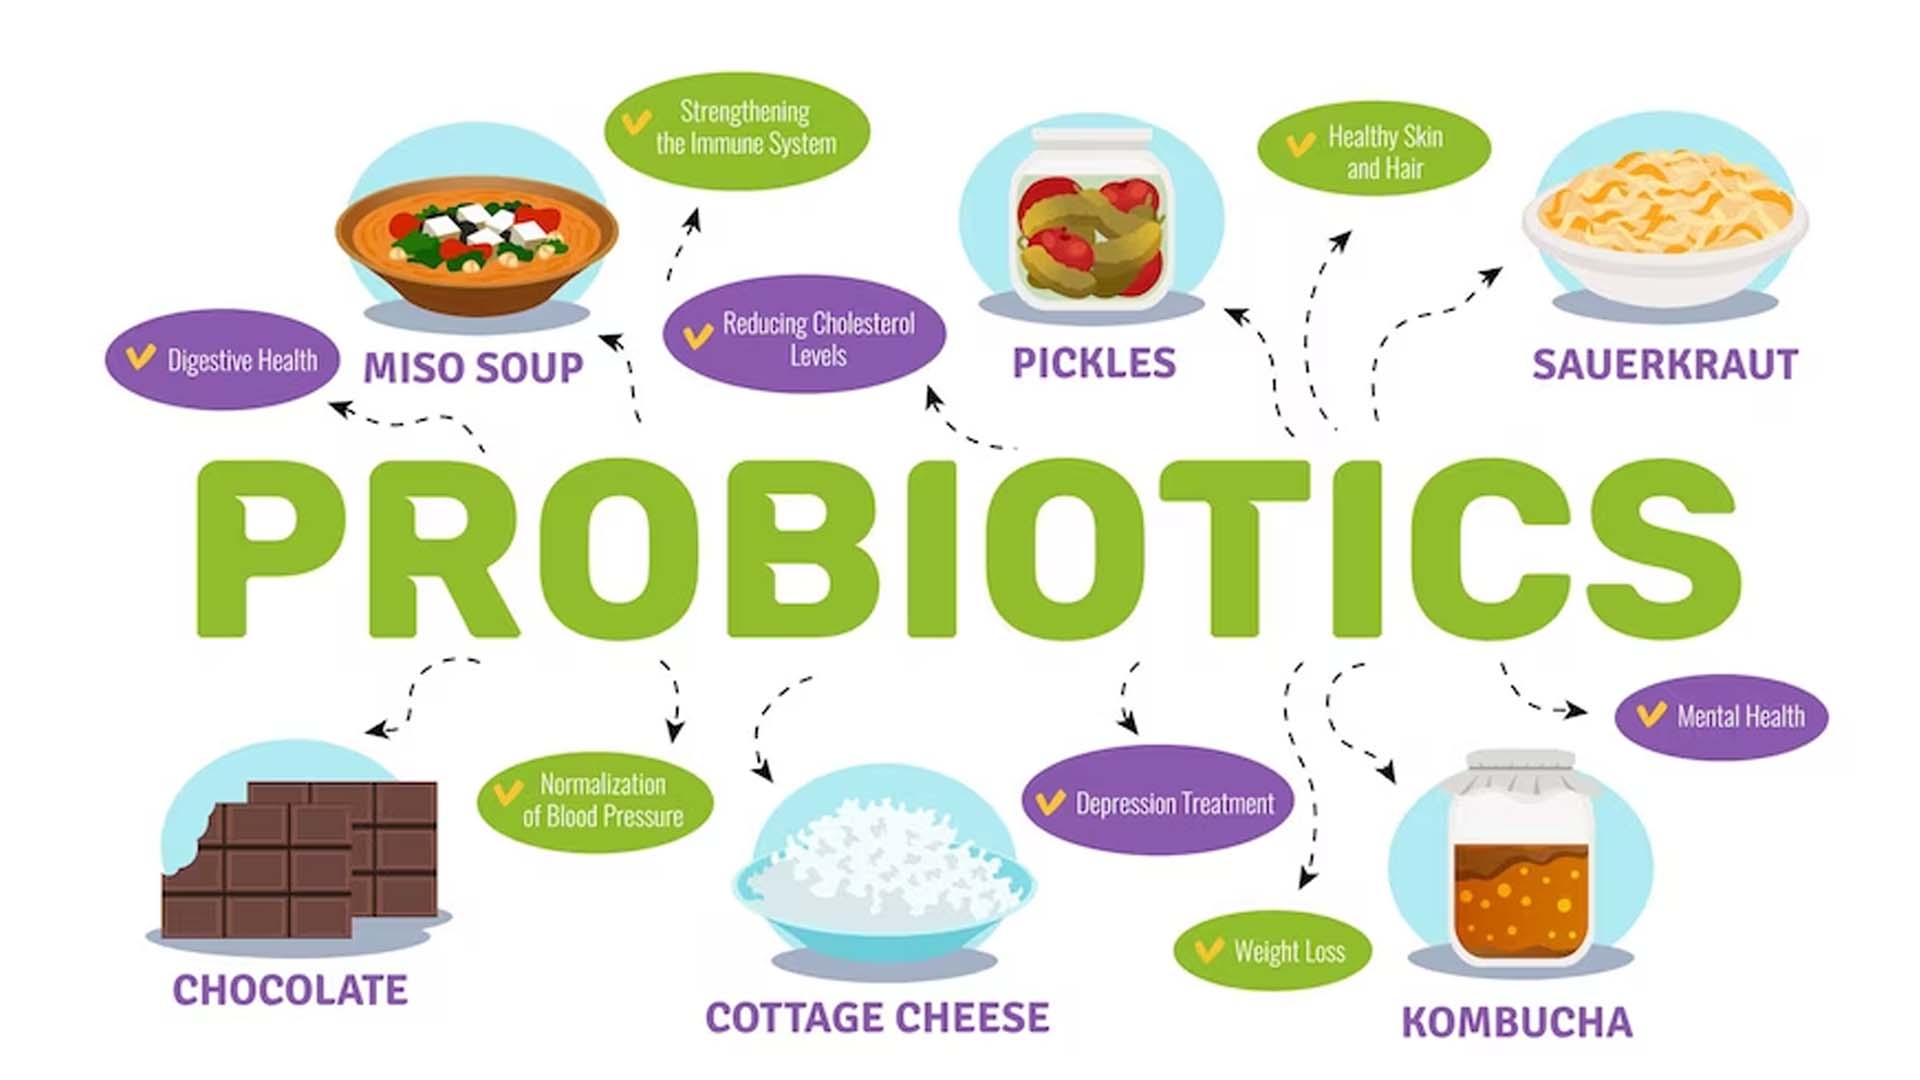 Health Benefits of Probiotics